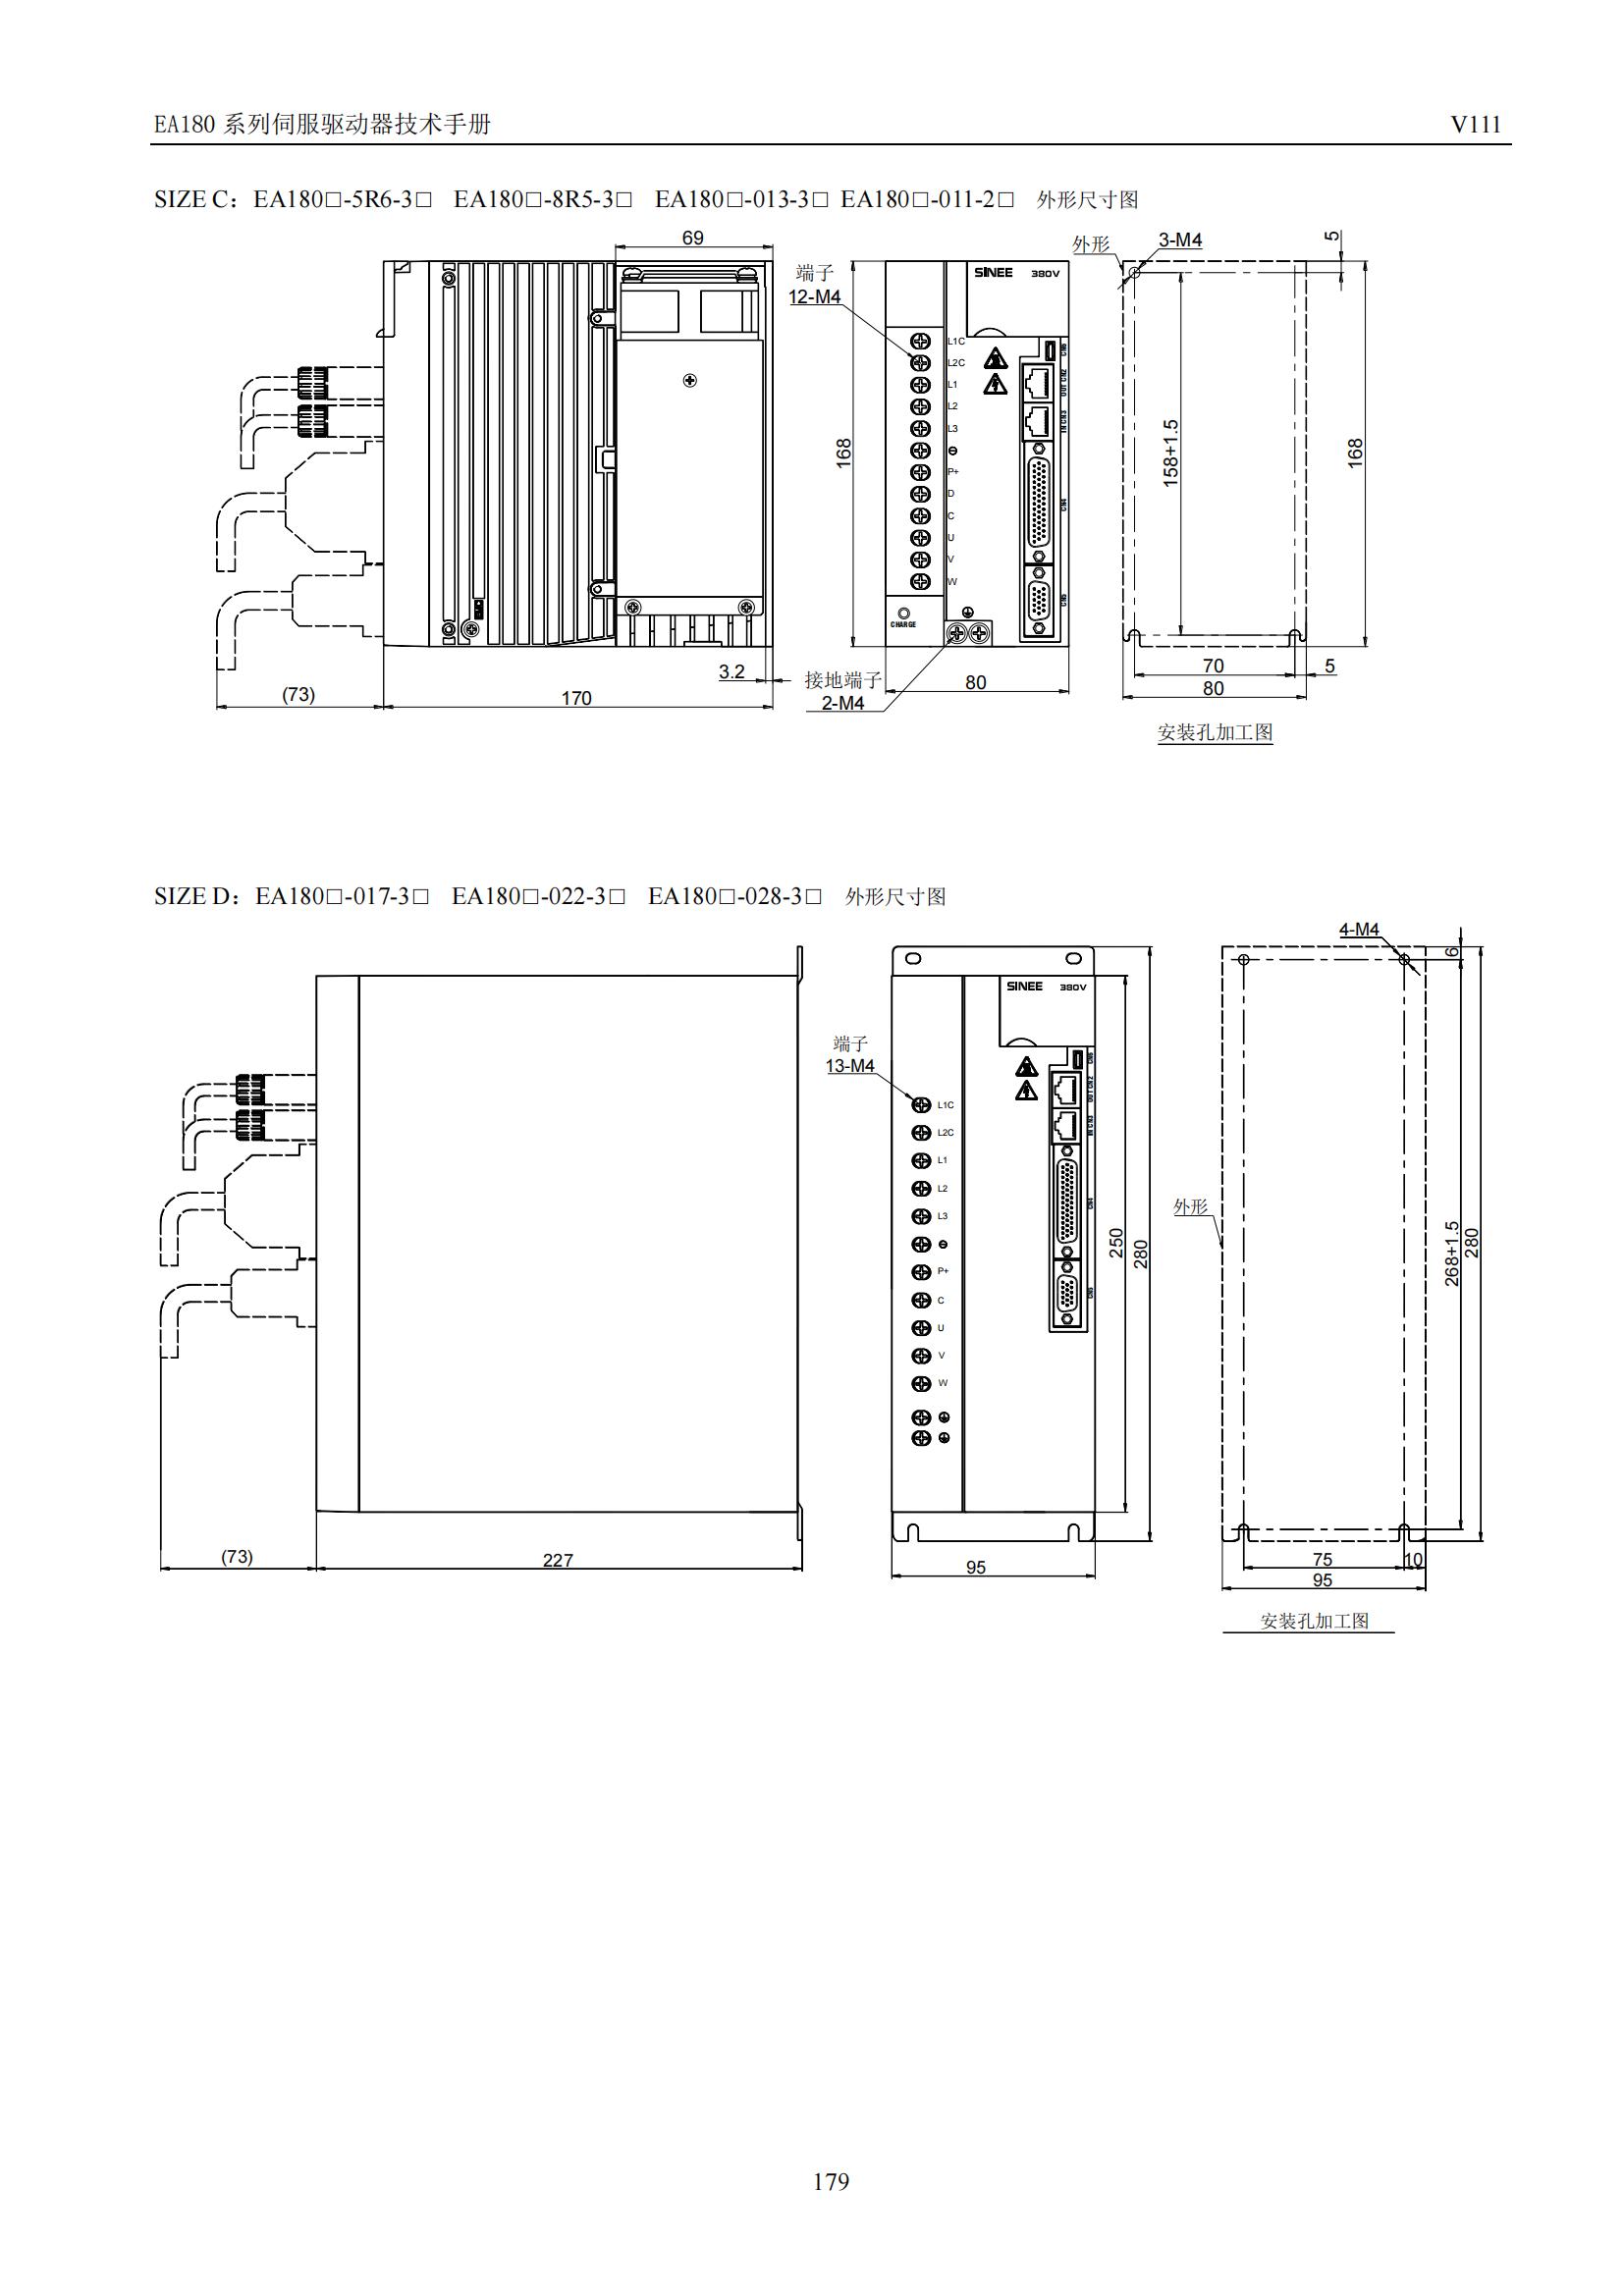 EA180系列模拟量脉冲型伺服驱动器技术手册 V111_02.jpg